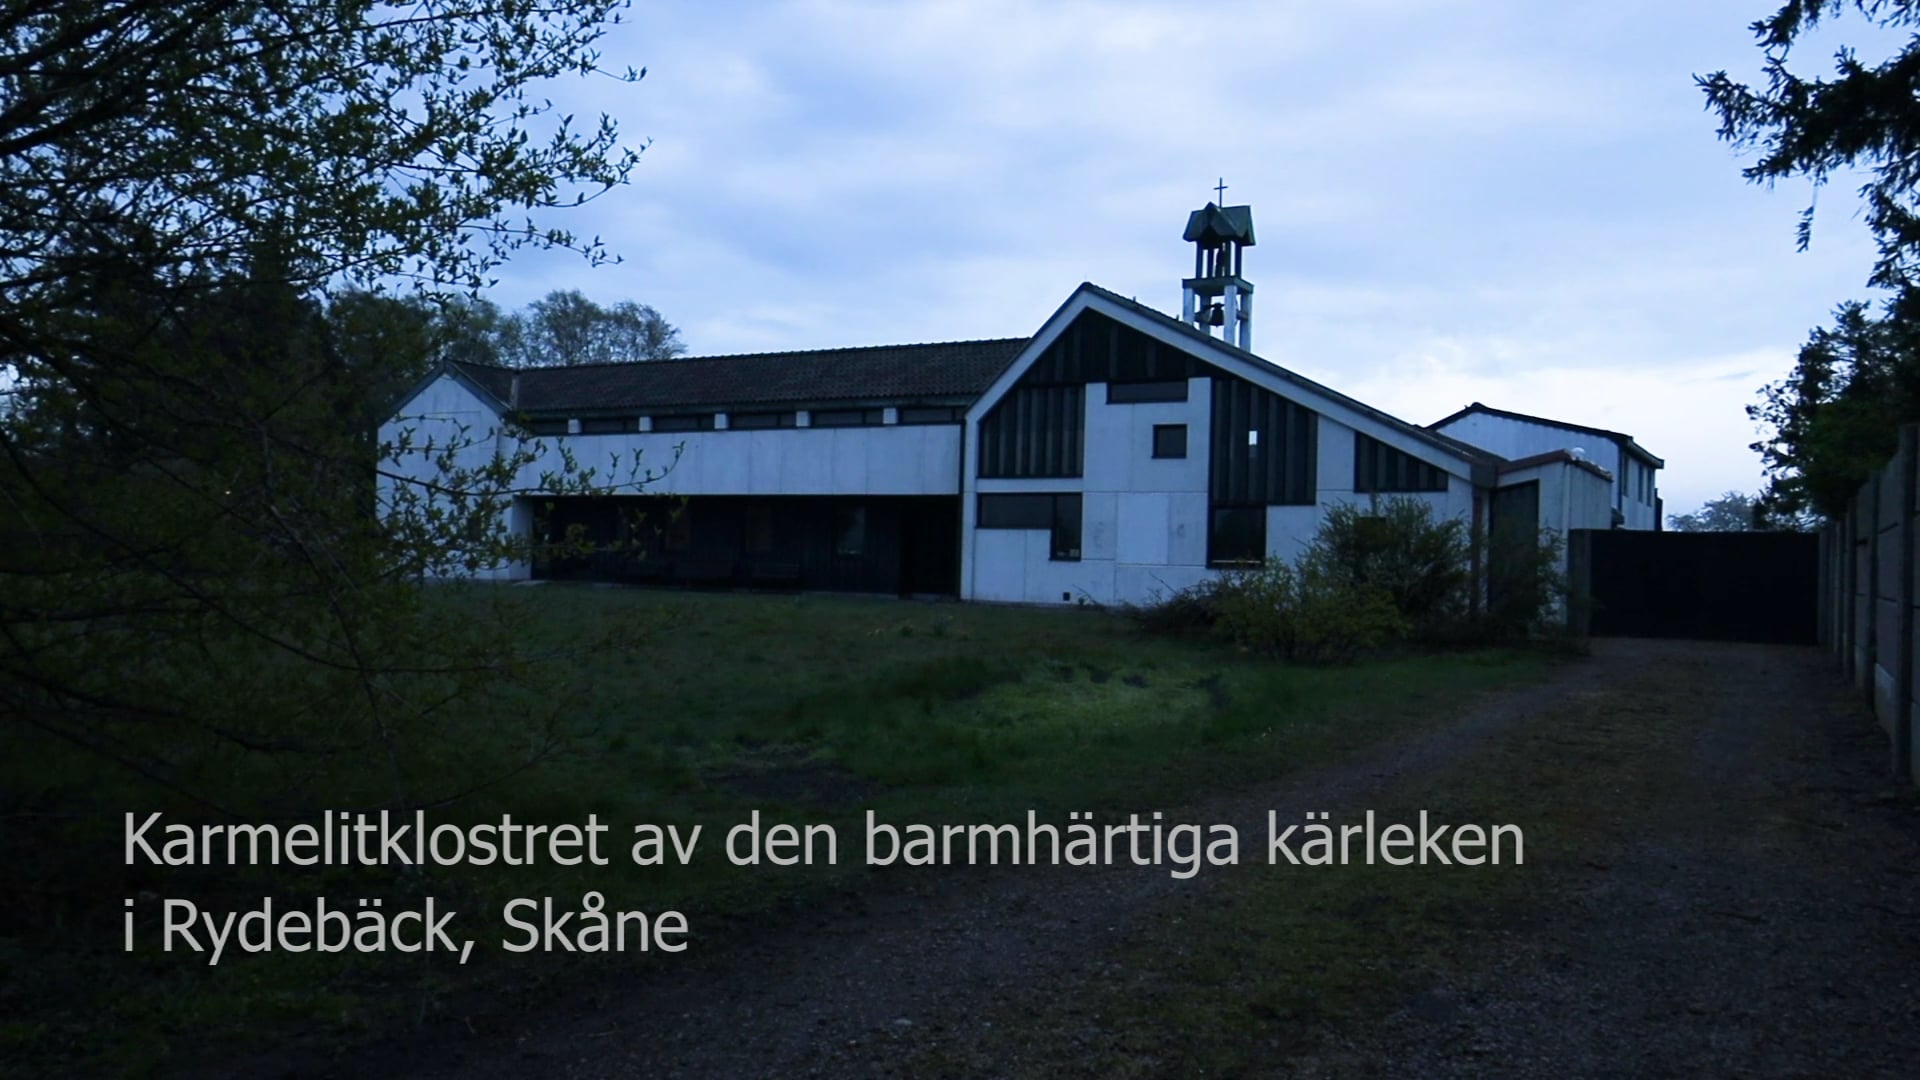 Karmelitklostret i Rydebäck, Skåne